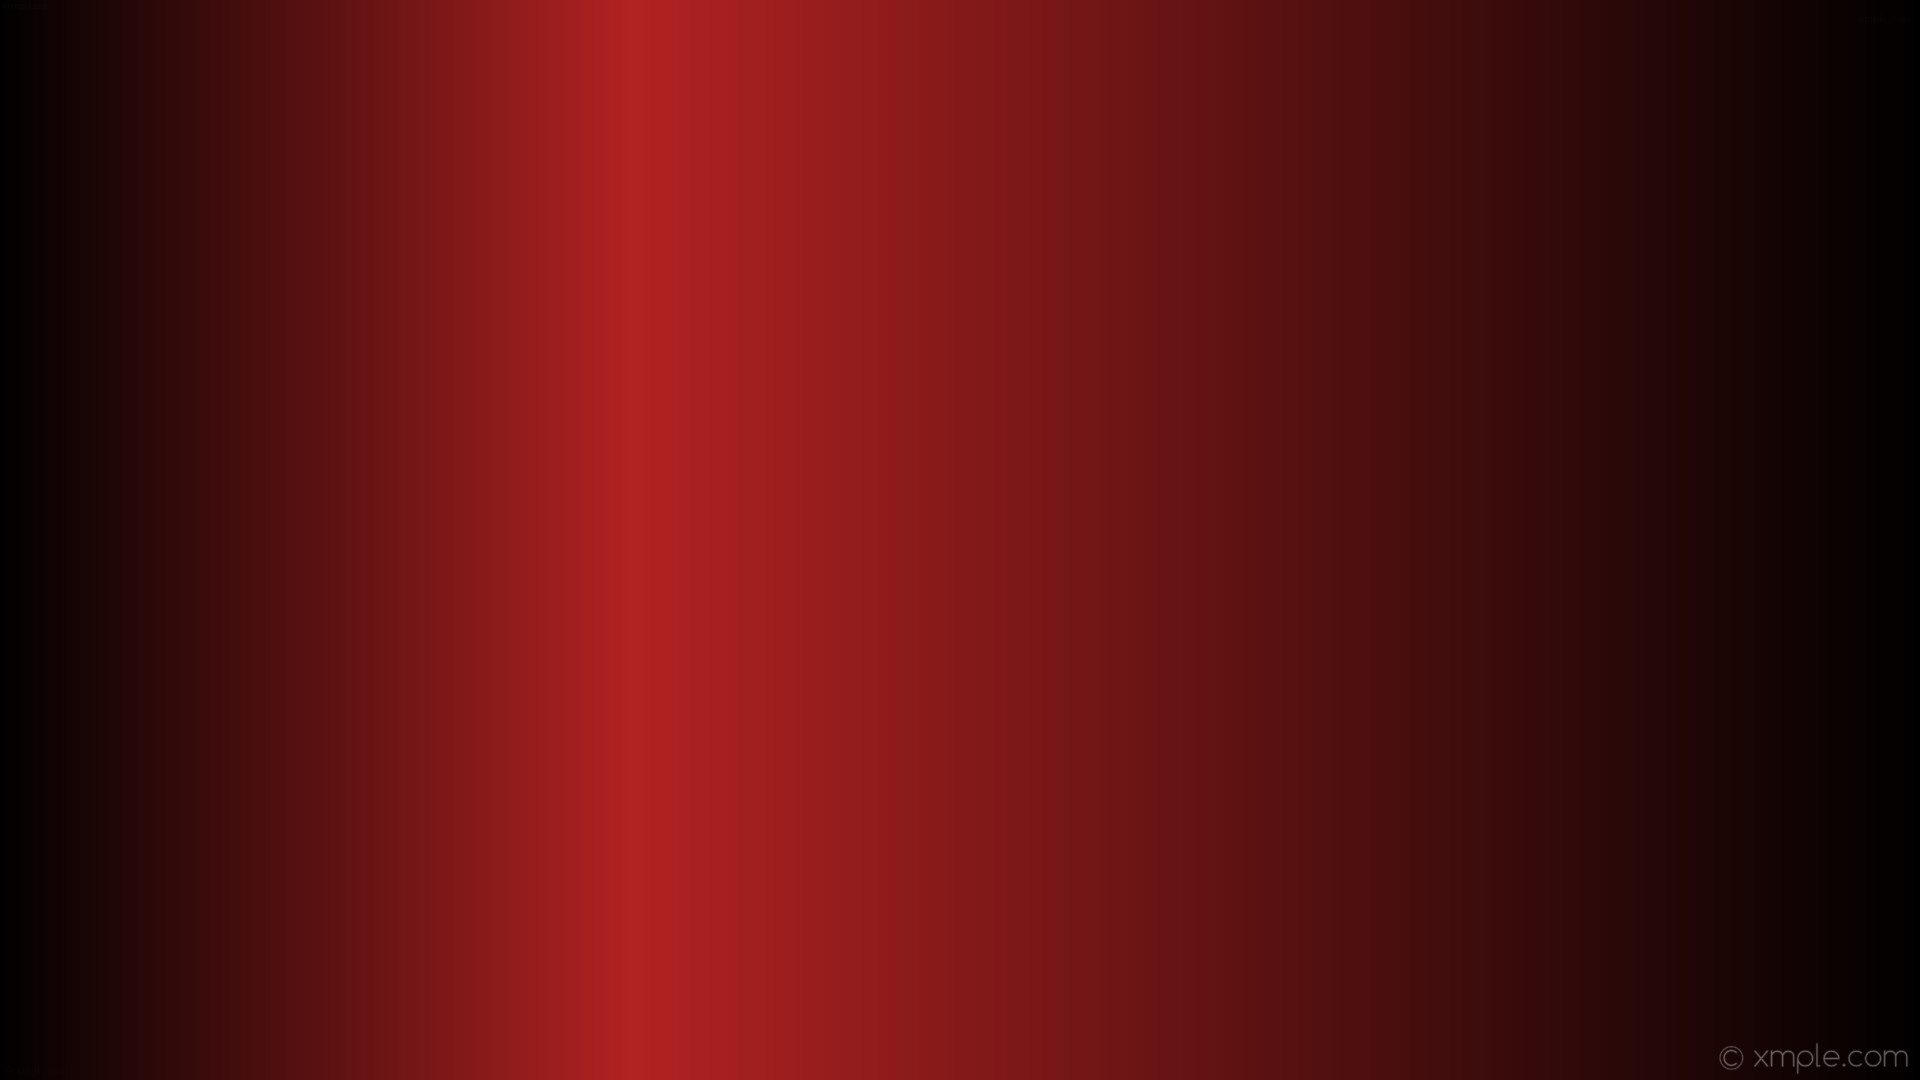 Wallpaper linear highlight black gradient red fire brick #b22222 180 33